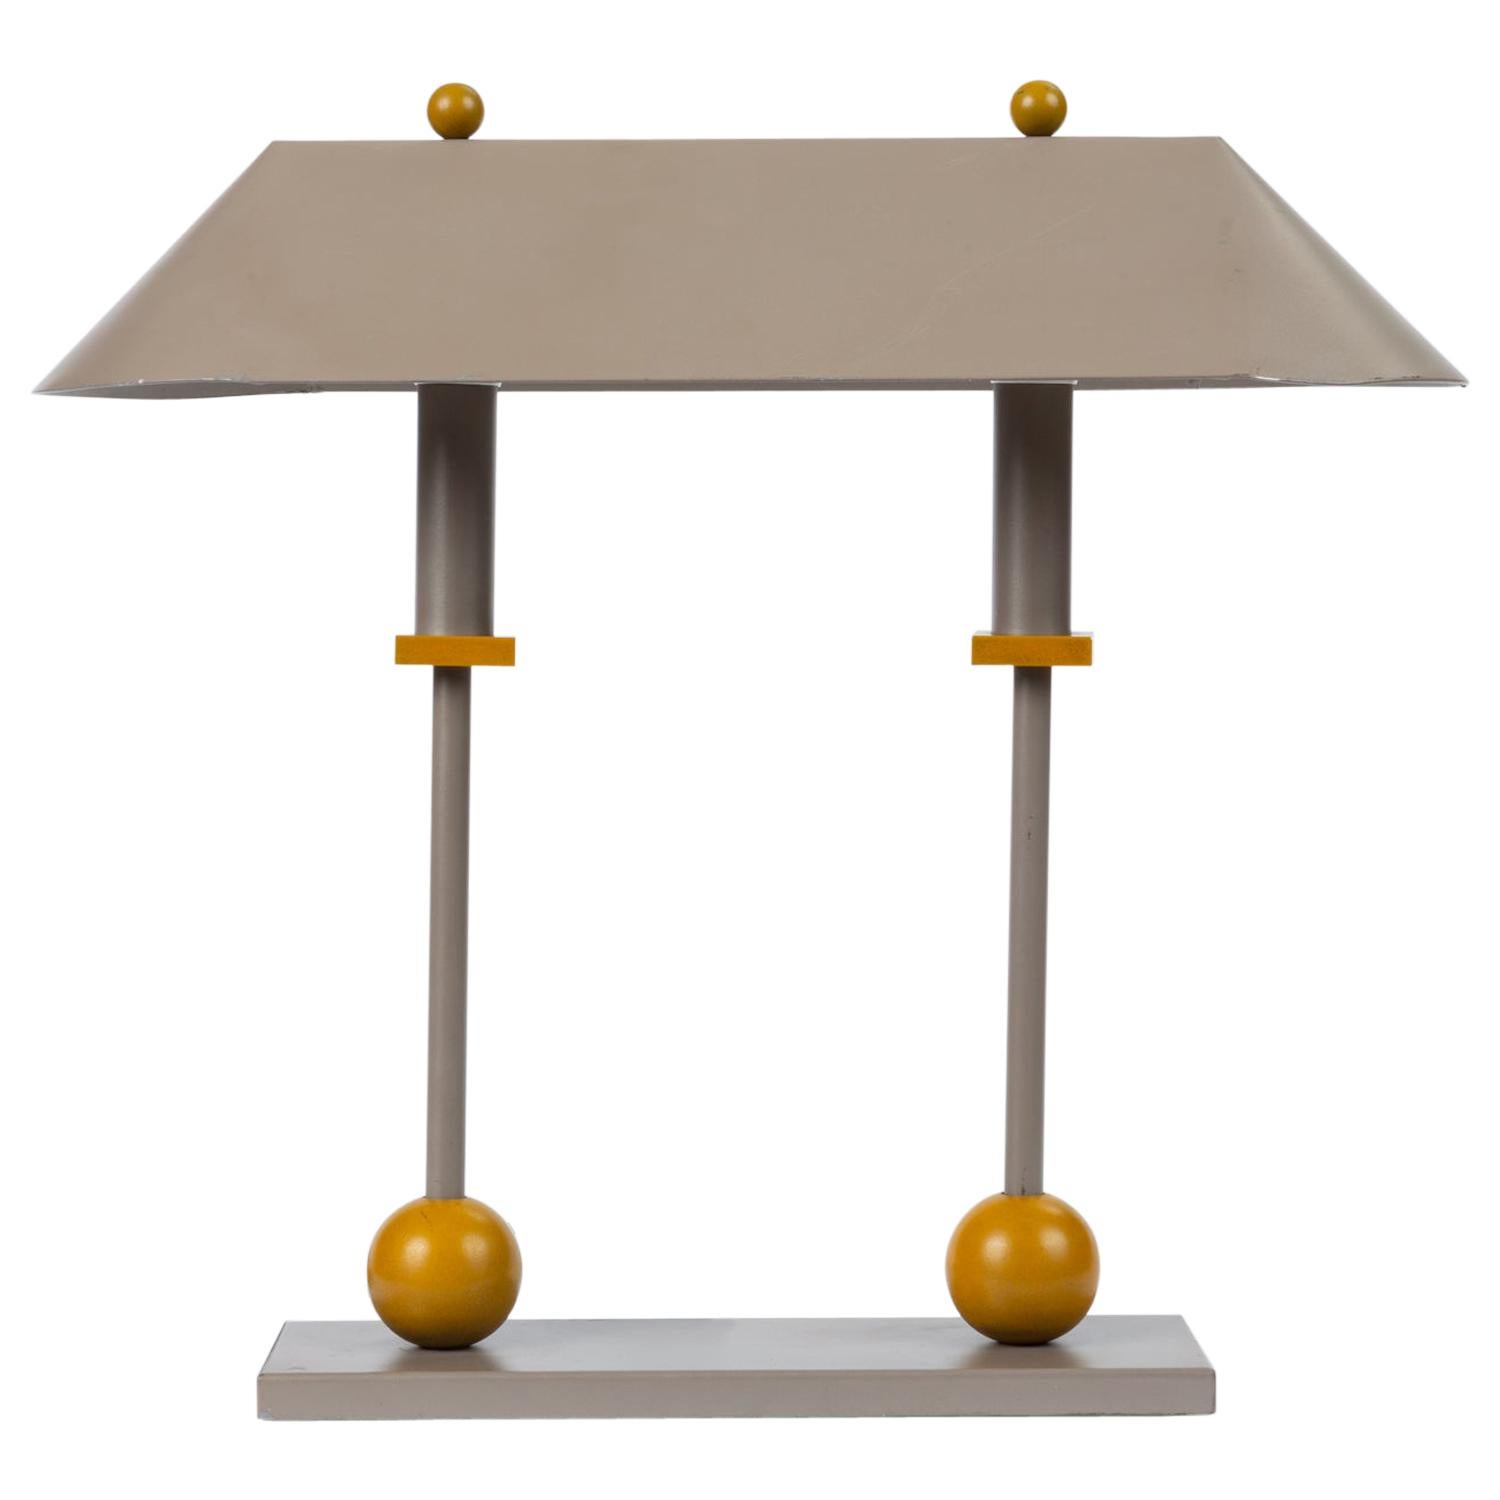 1990s Postmodern Desk or Table Lamp by Robert Sonneman for George Kovacs